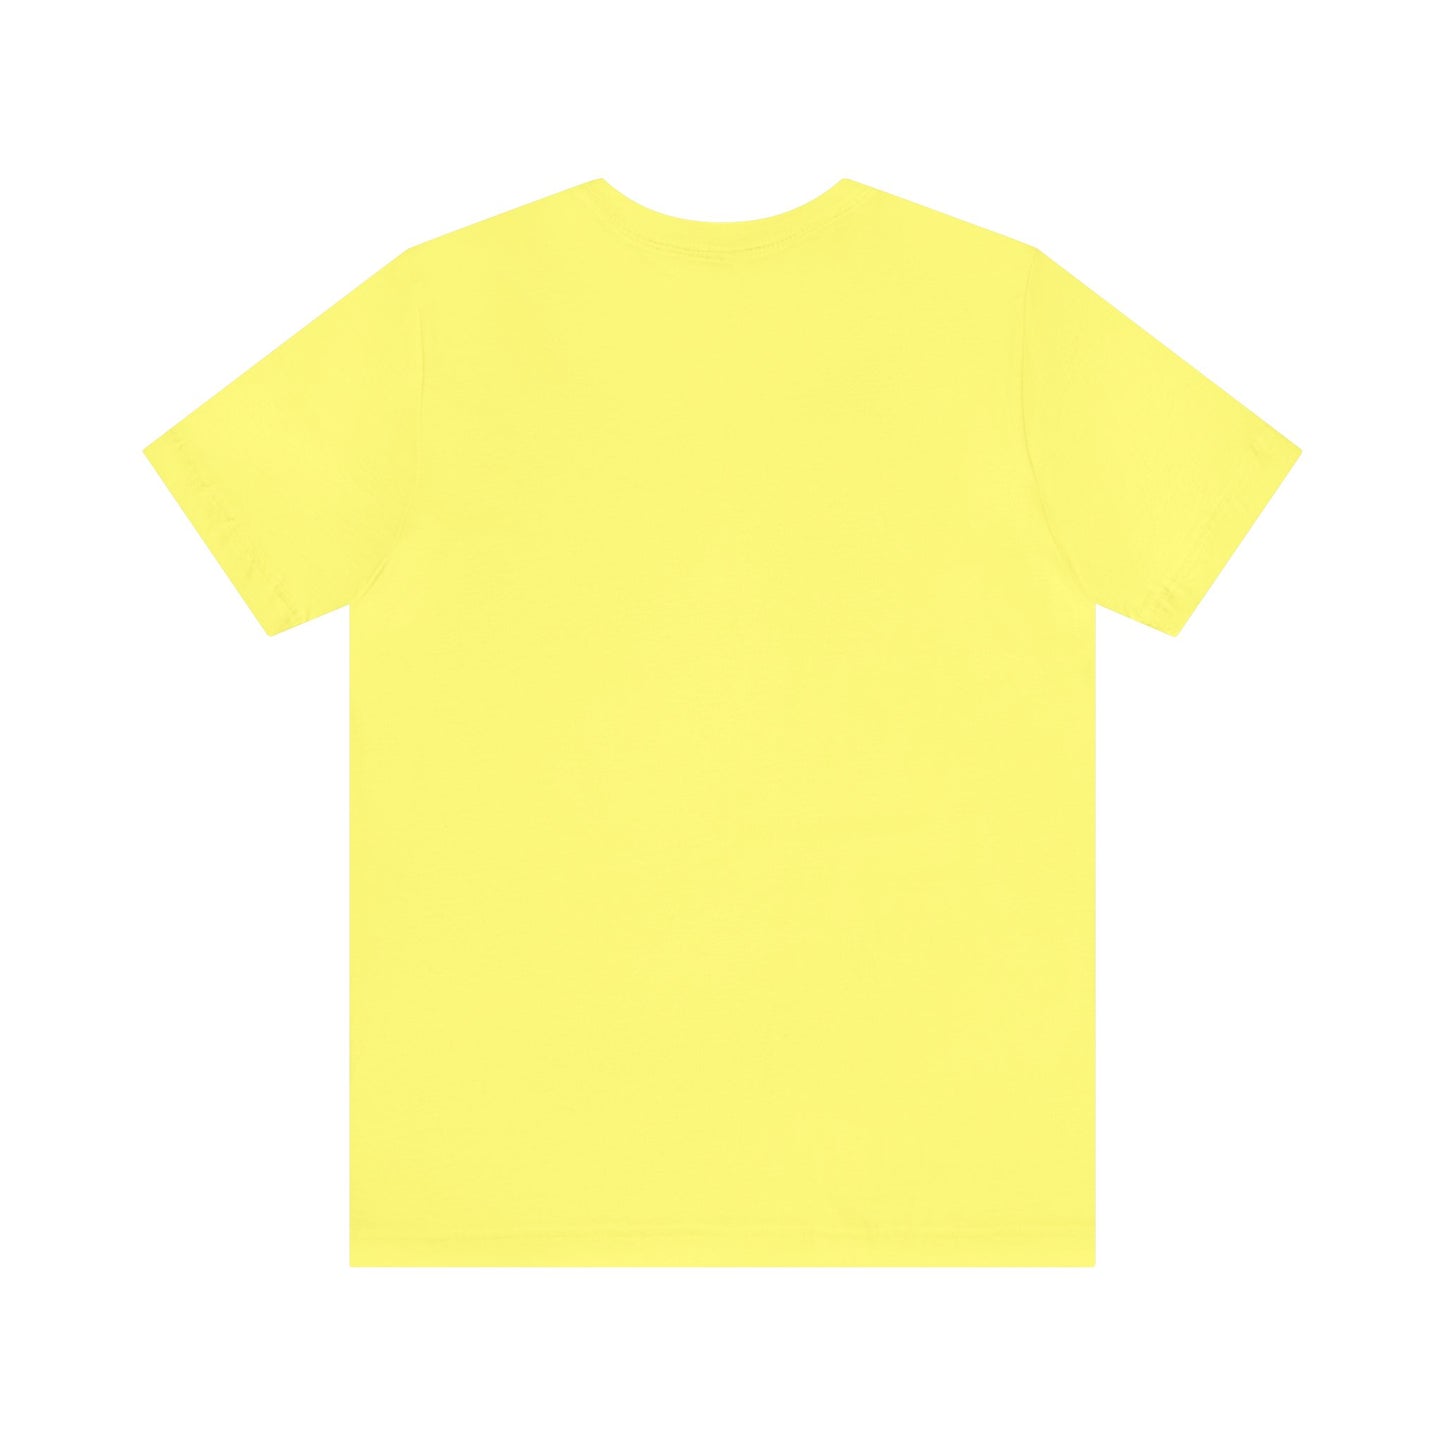 MALIBU SUN Unisex Jersey Short Sleeve Tee in 7 Colors